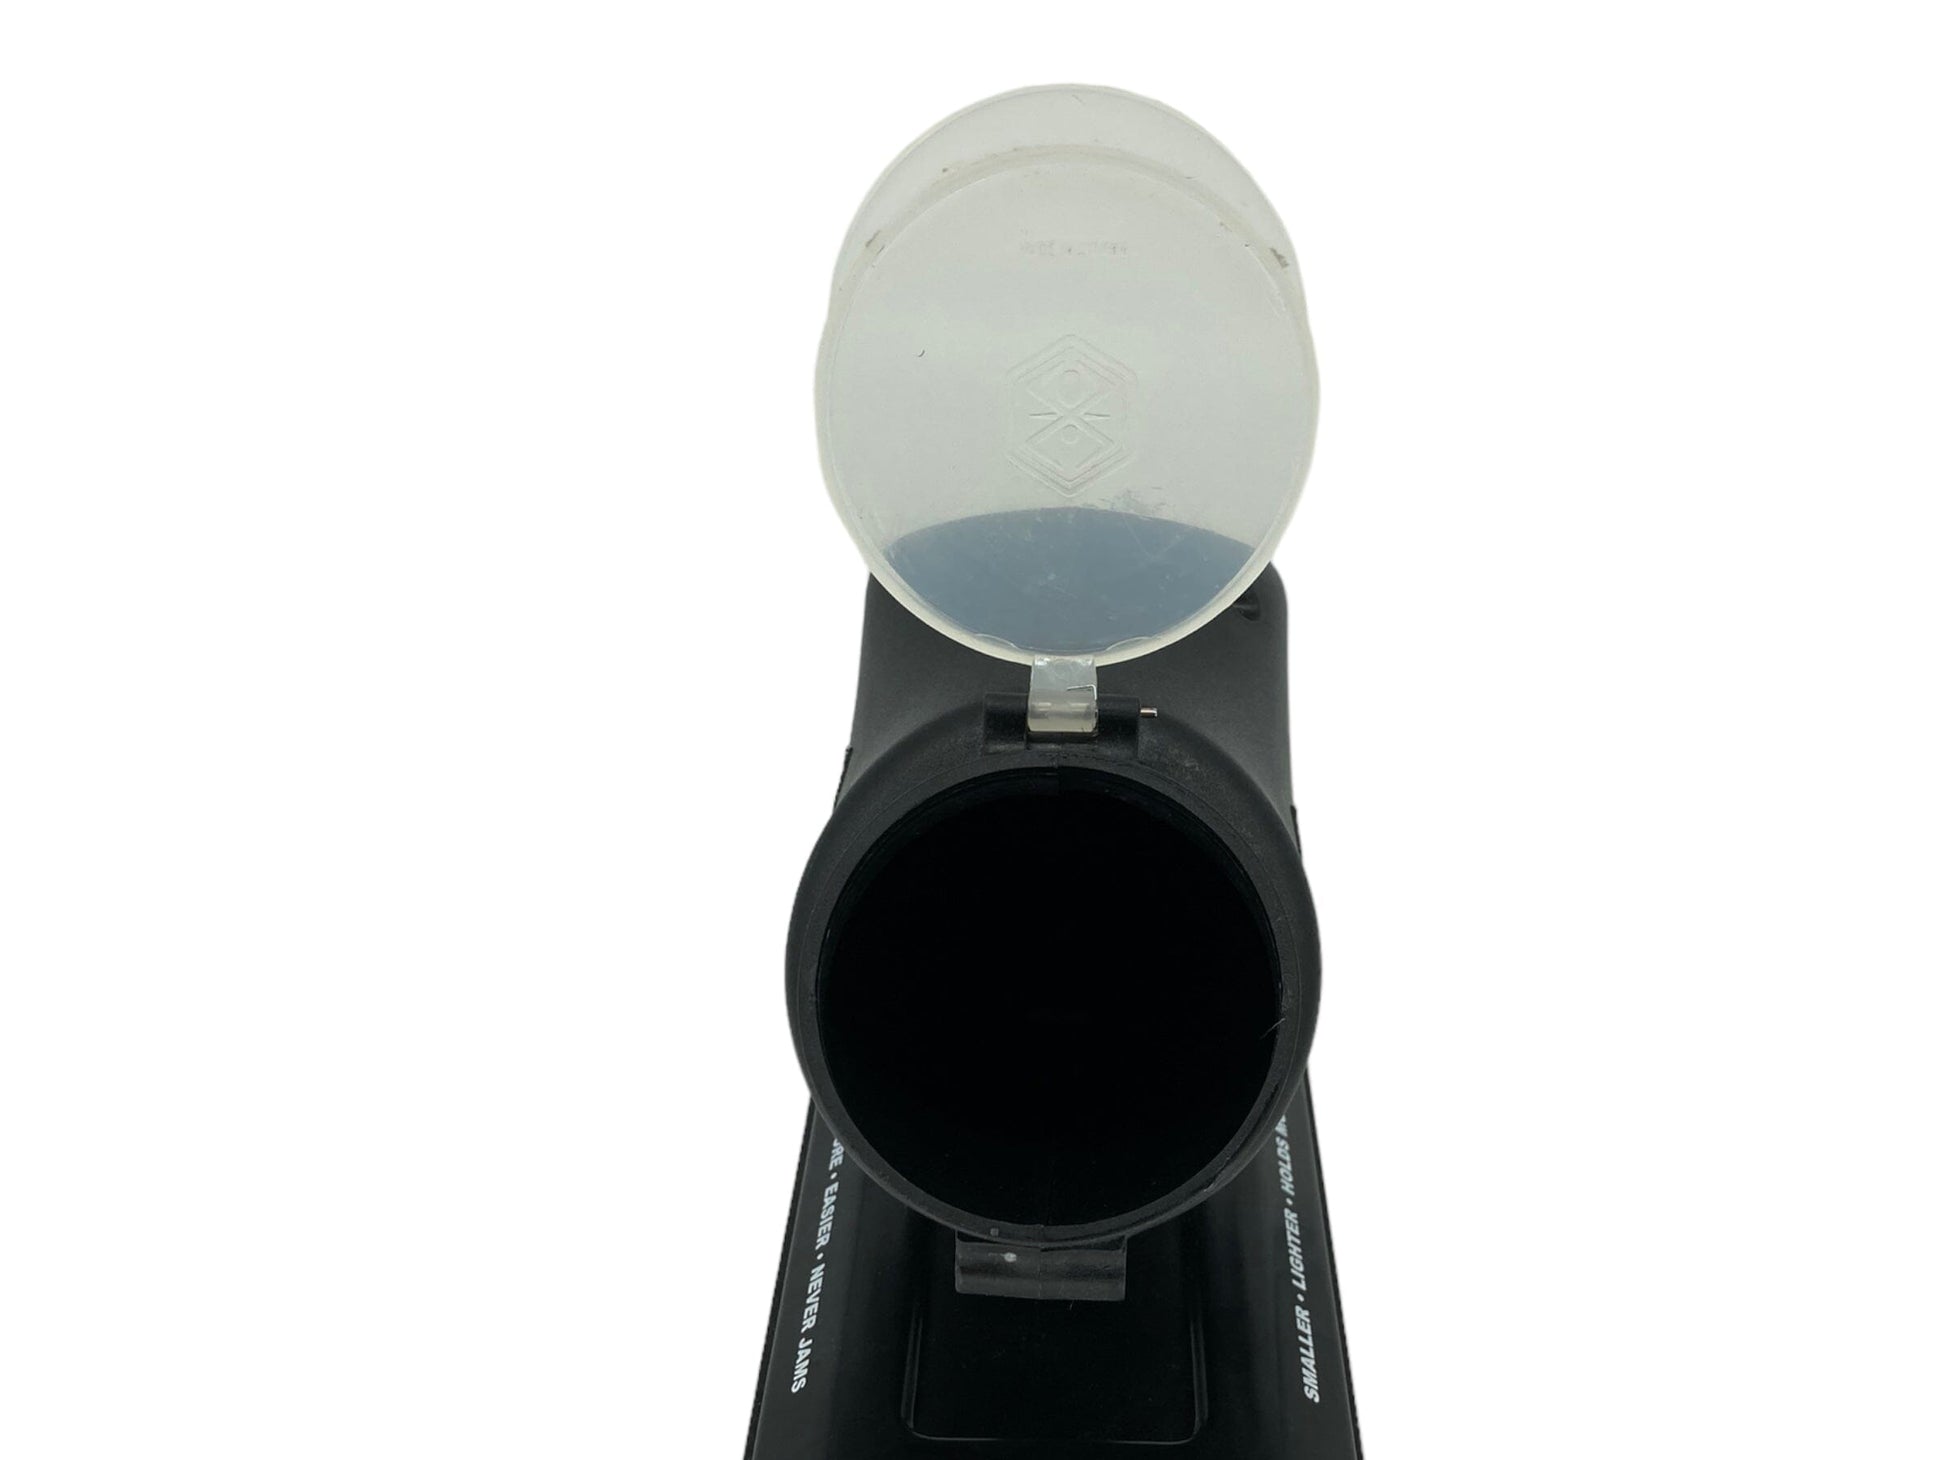 Used Spyder Gravity Hopper Paintball Gun from CPXBrosPaintball Buy/Sell/Trade Paintball Markers, Paintball Hoppers, Paintball Masks, and Hormesis Headbands